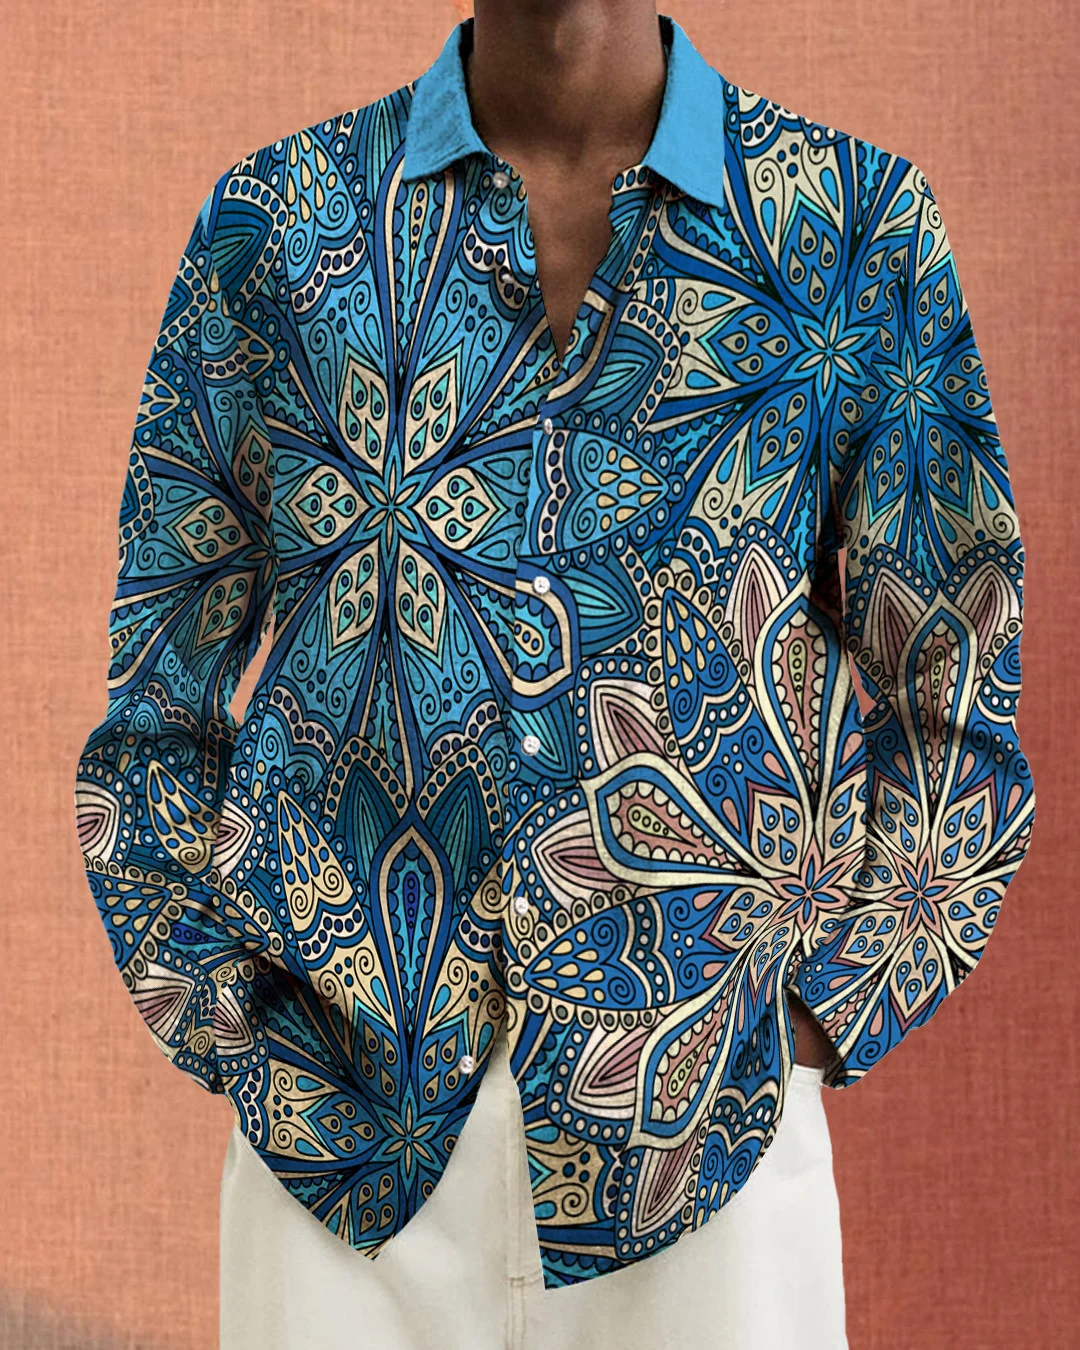 Men's cotton&linen long-sleeved fashion casual shirt 9d82